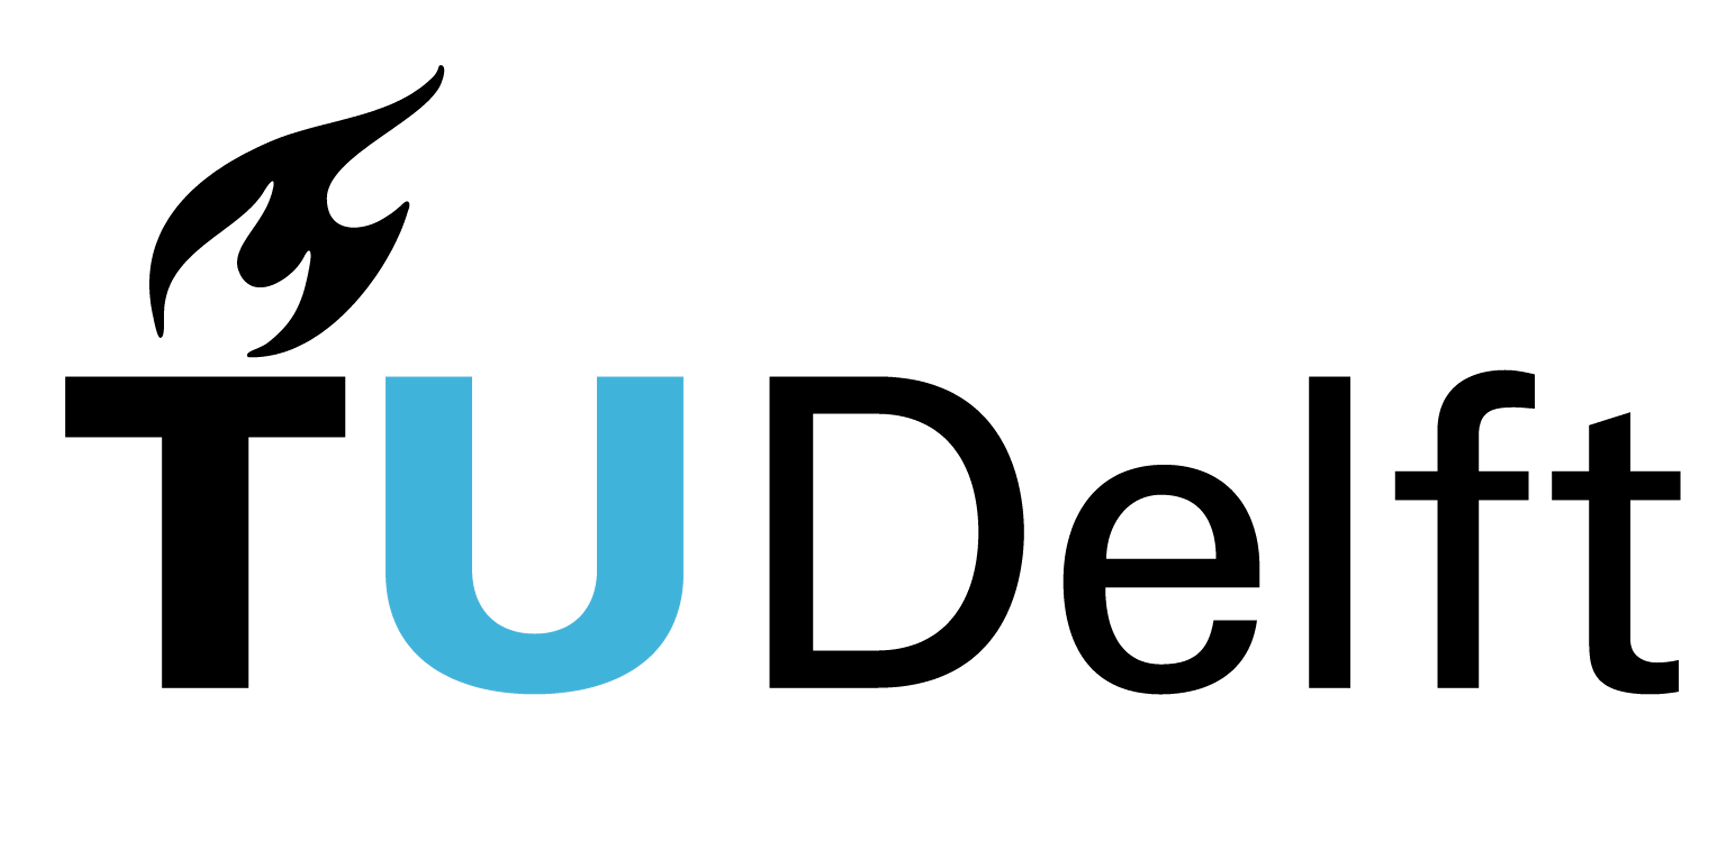 logo Delft University of Technology